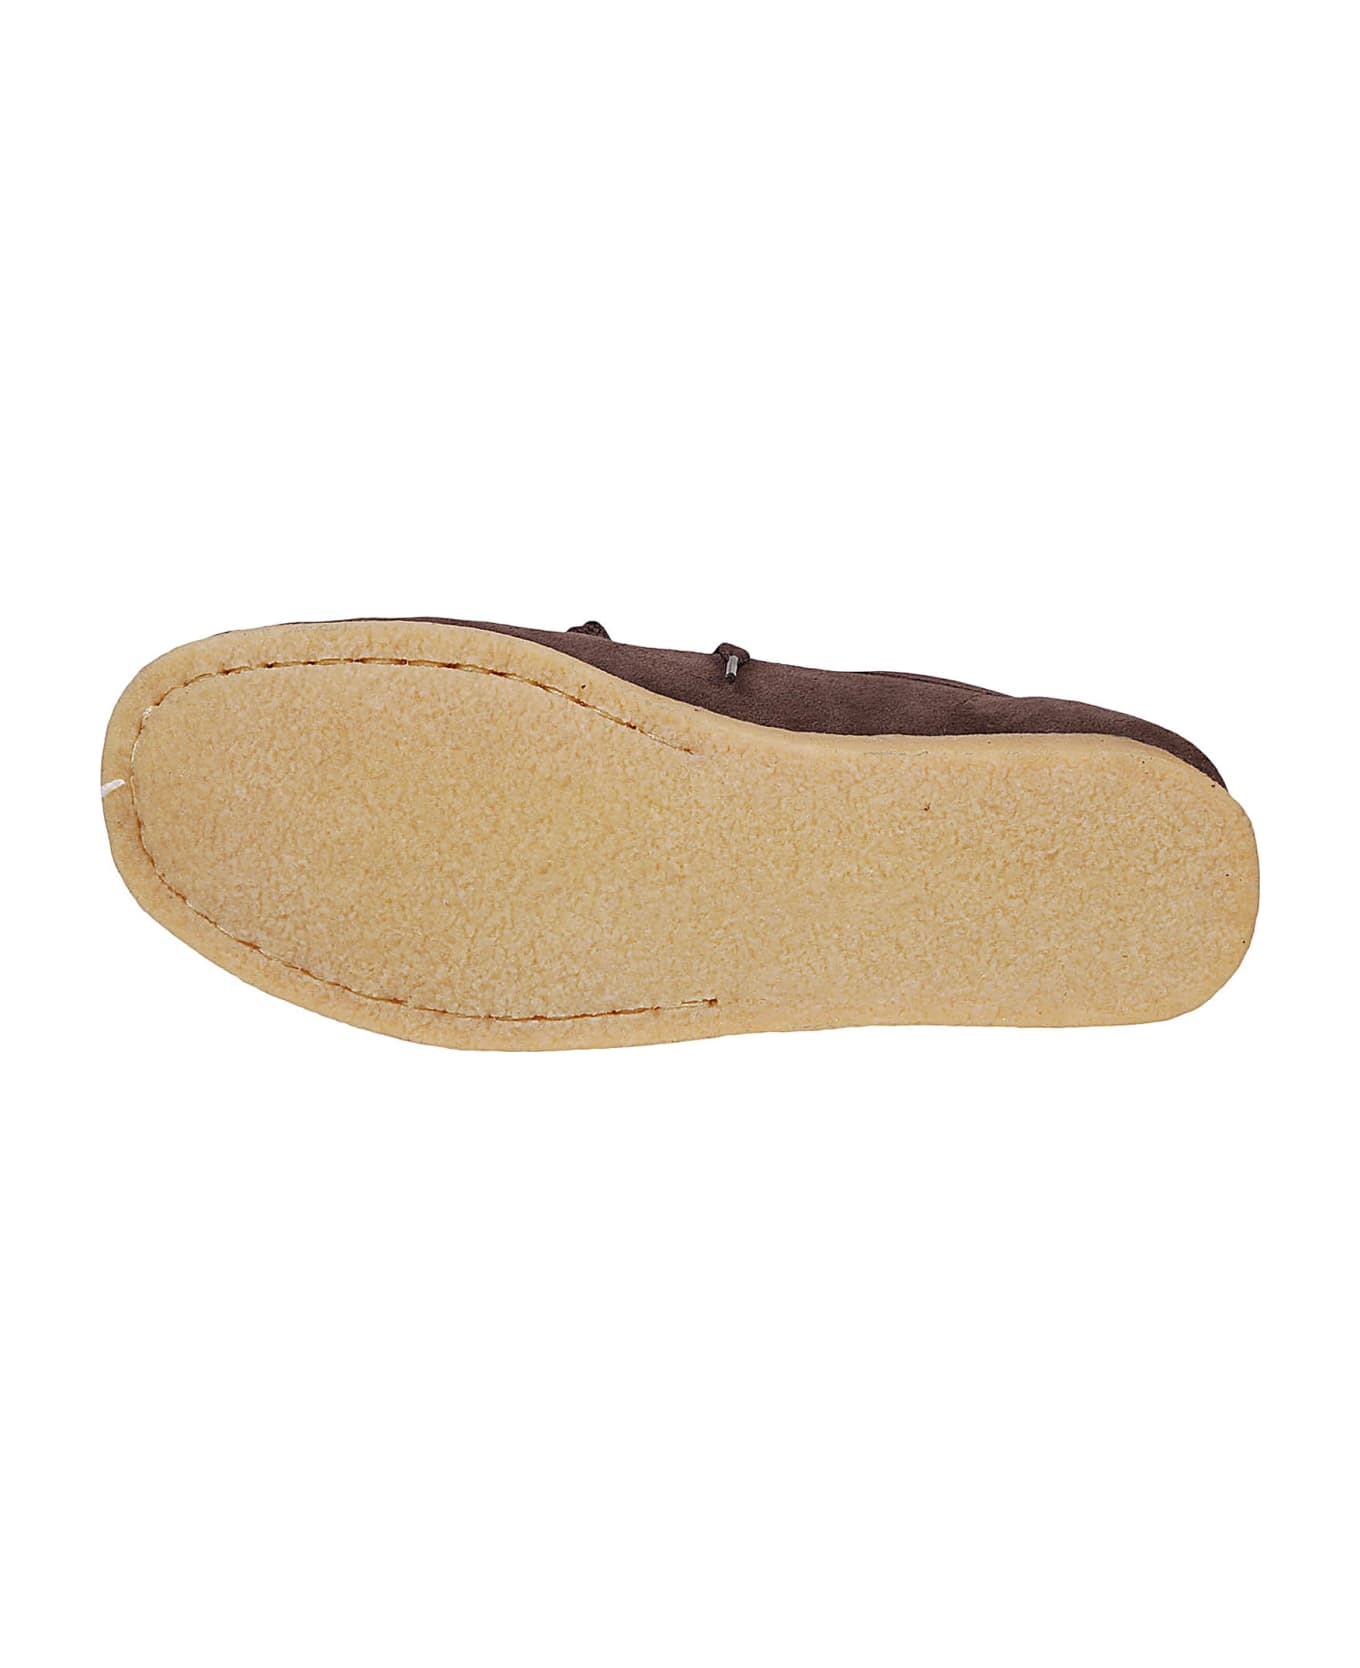 Sebago Koala Lace-up Shoes - Brown Gum